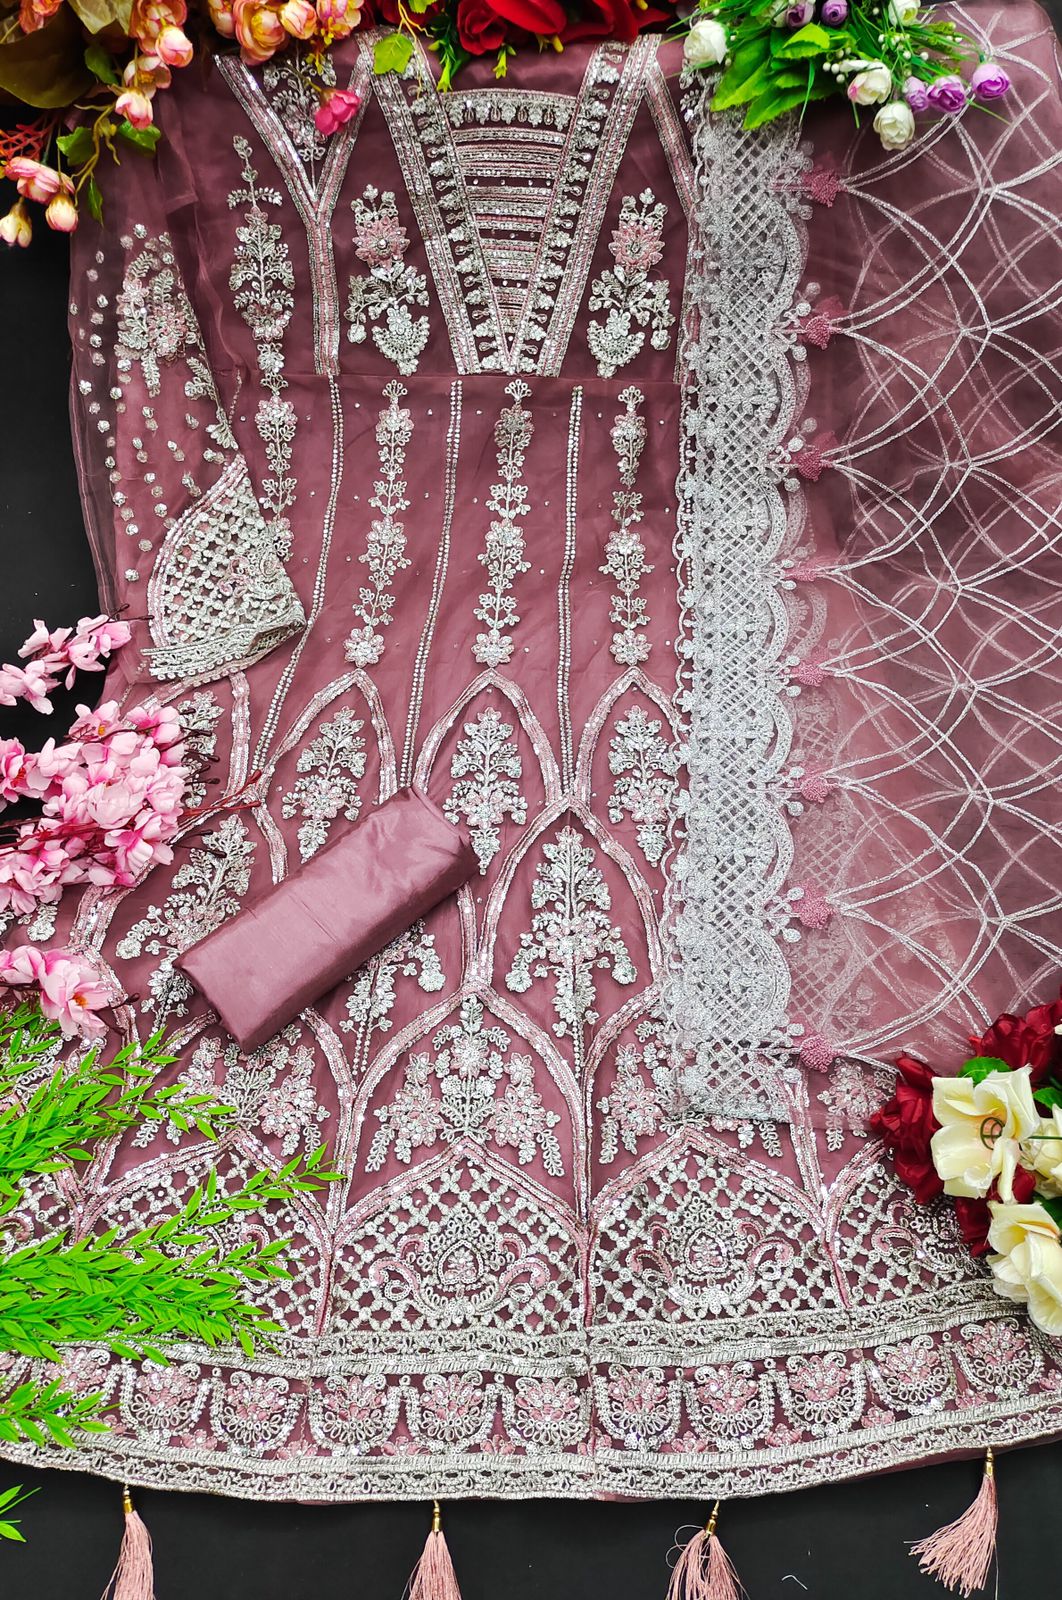 Kaleesha Fashion Kf 115 Semi Stitched Dress Material Catalog Lowest Price